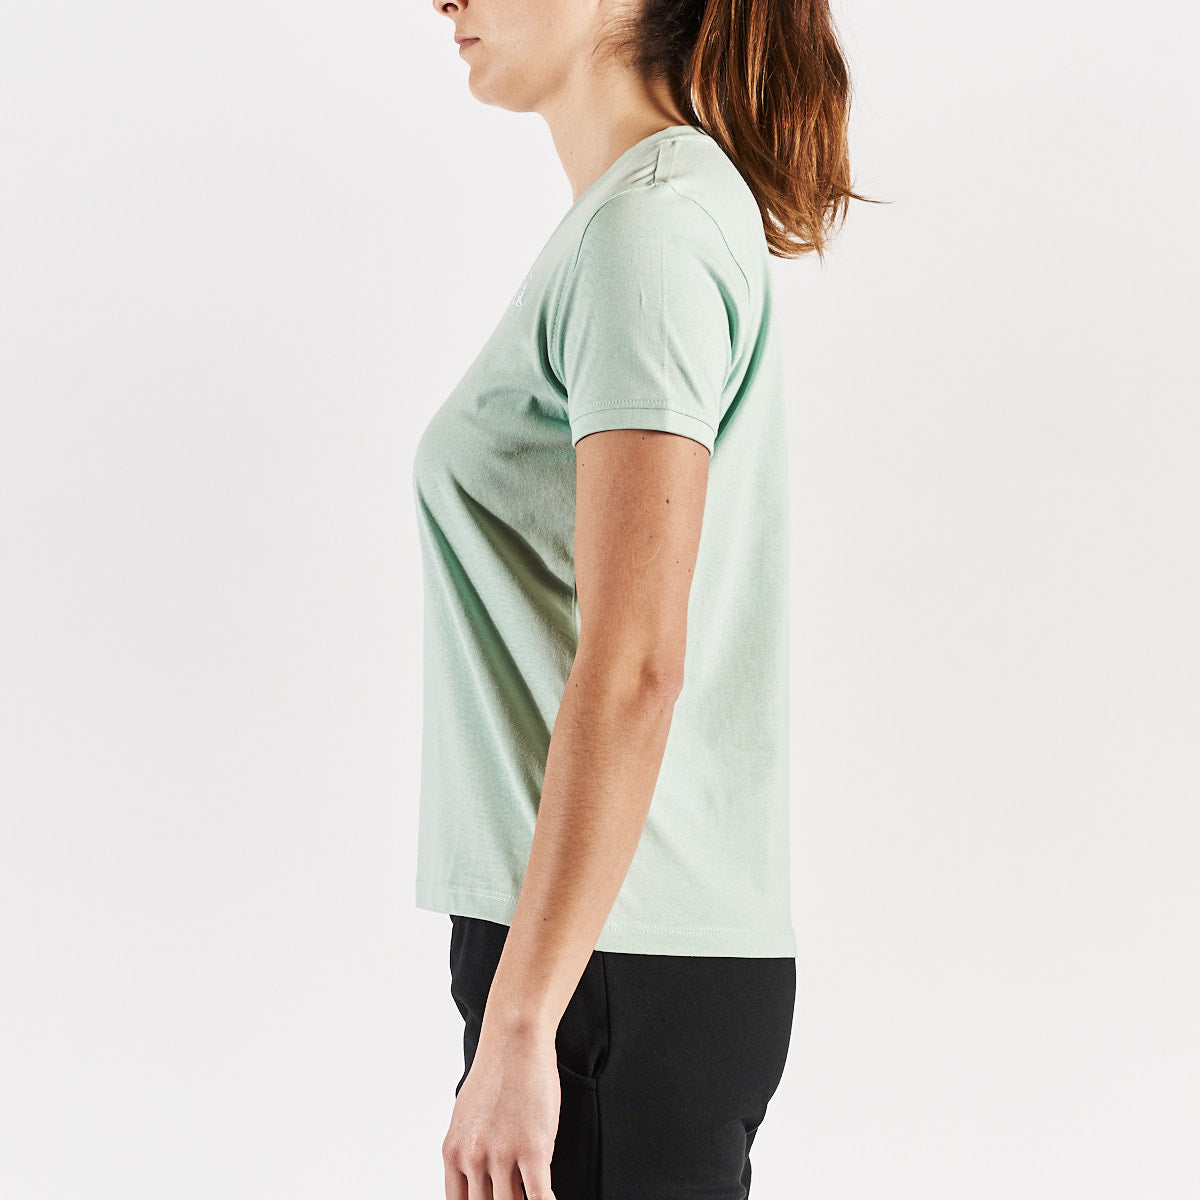 Camiseta Verde Cabou Mujer - imagen 2